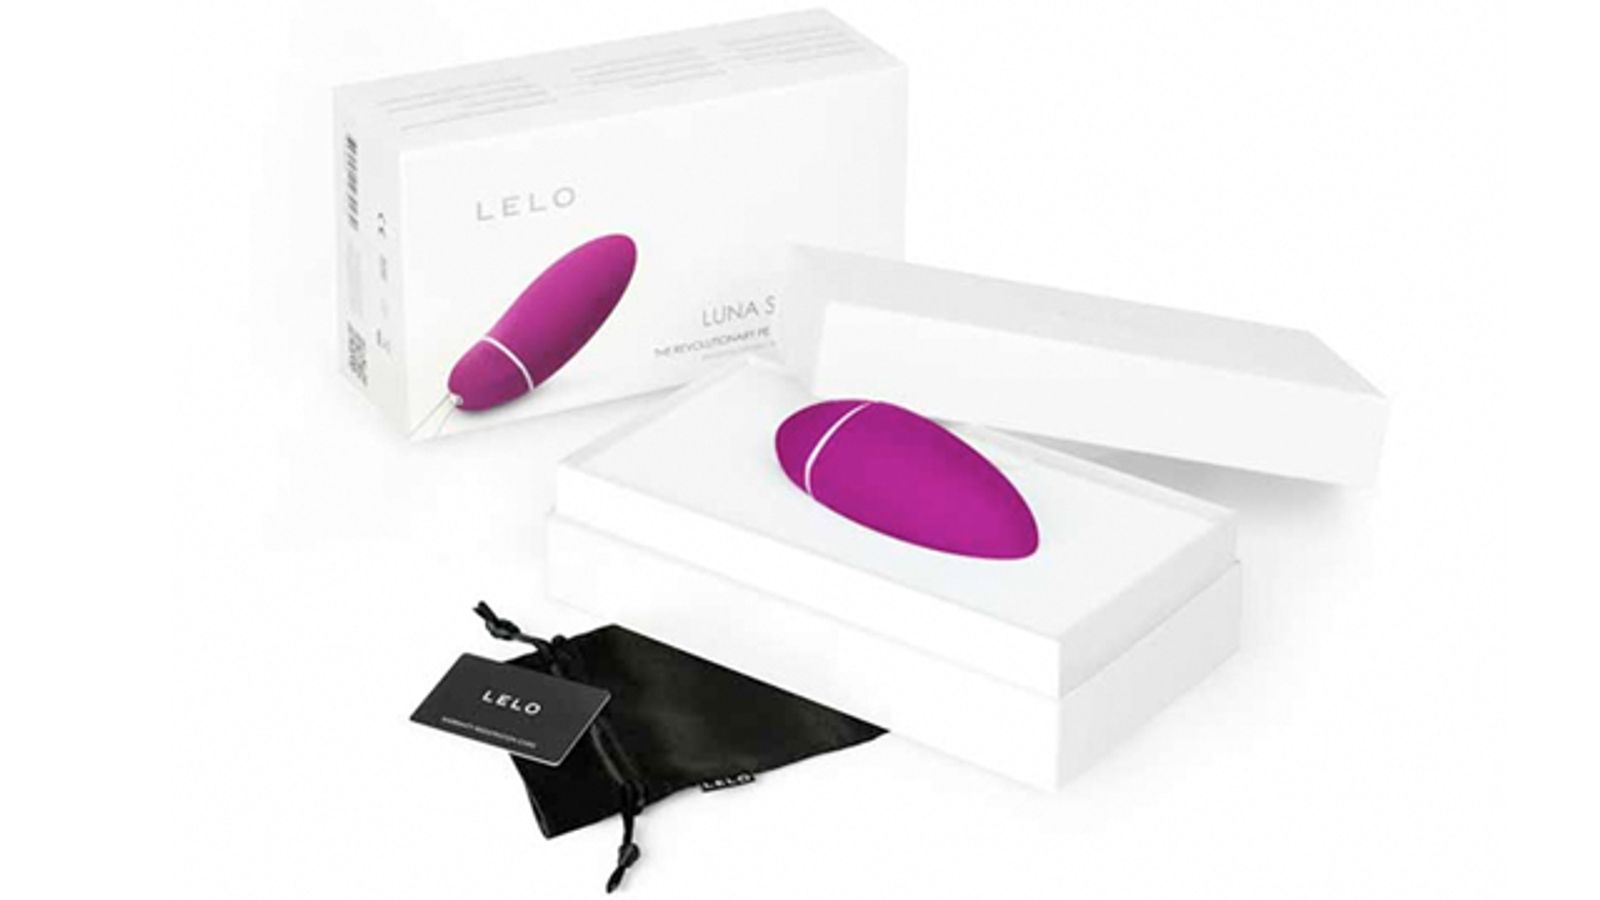 Entrenue Carrying LELO's Luna Smart Bead, Ora 2